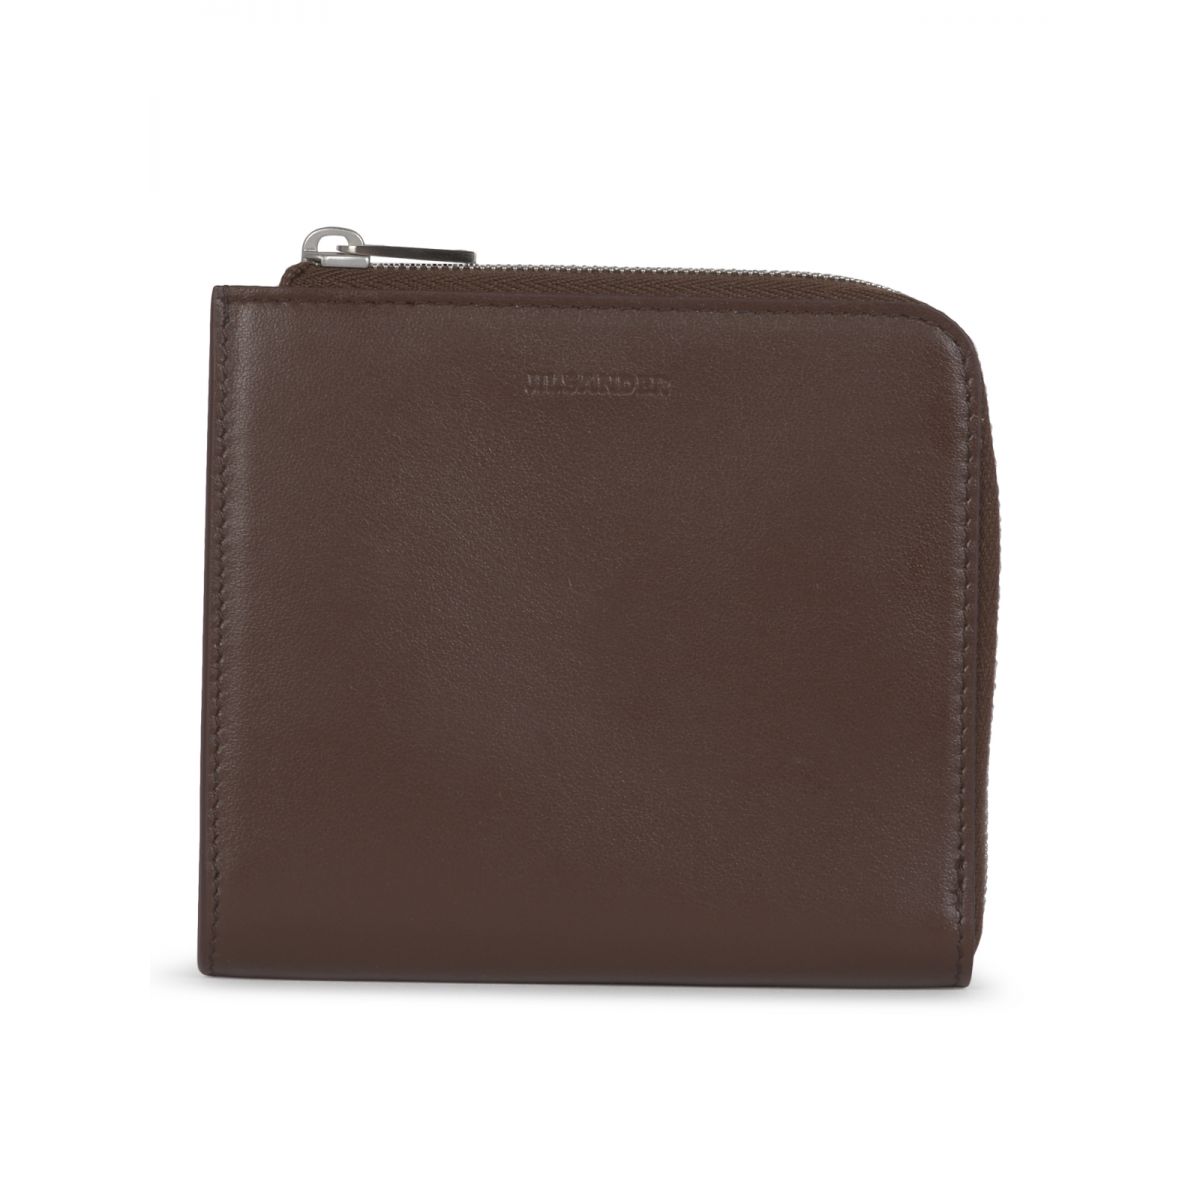 JIL SANDER - Zipped leather credit card purse with embossed Jil Sander log